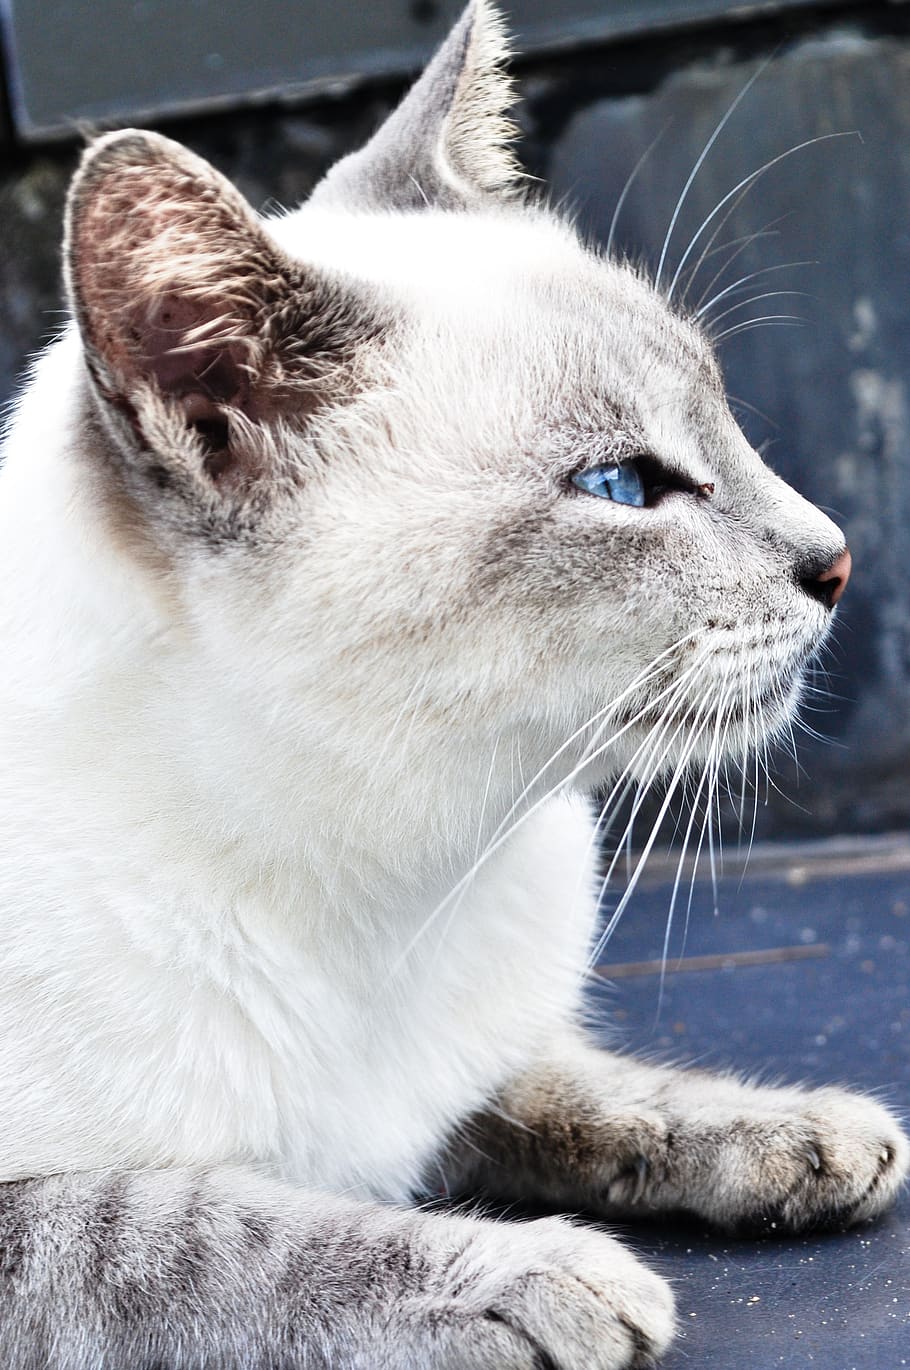 cat, white, blue eye, kitten, pet, animal, fur, cute, head, whiskers